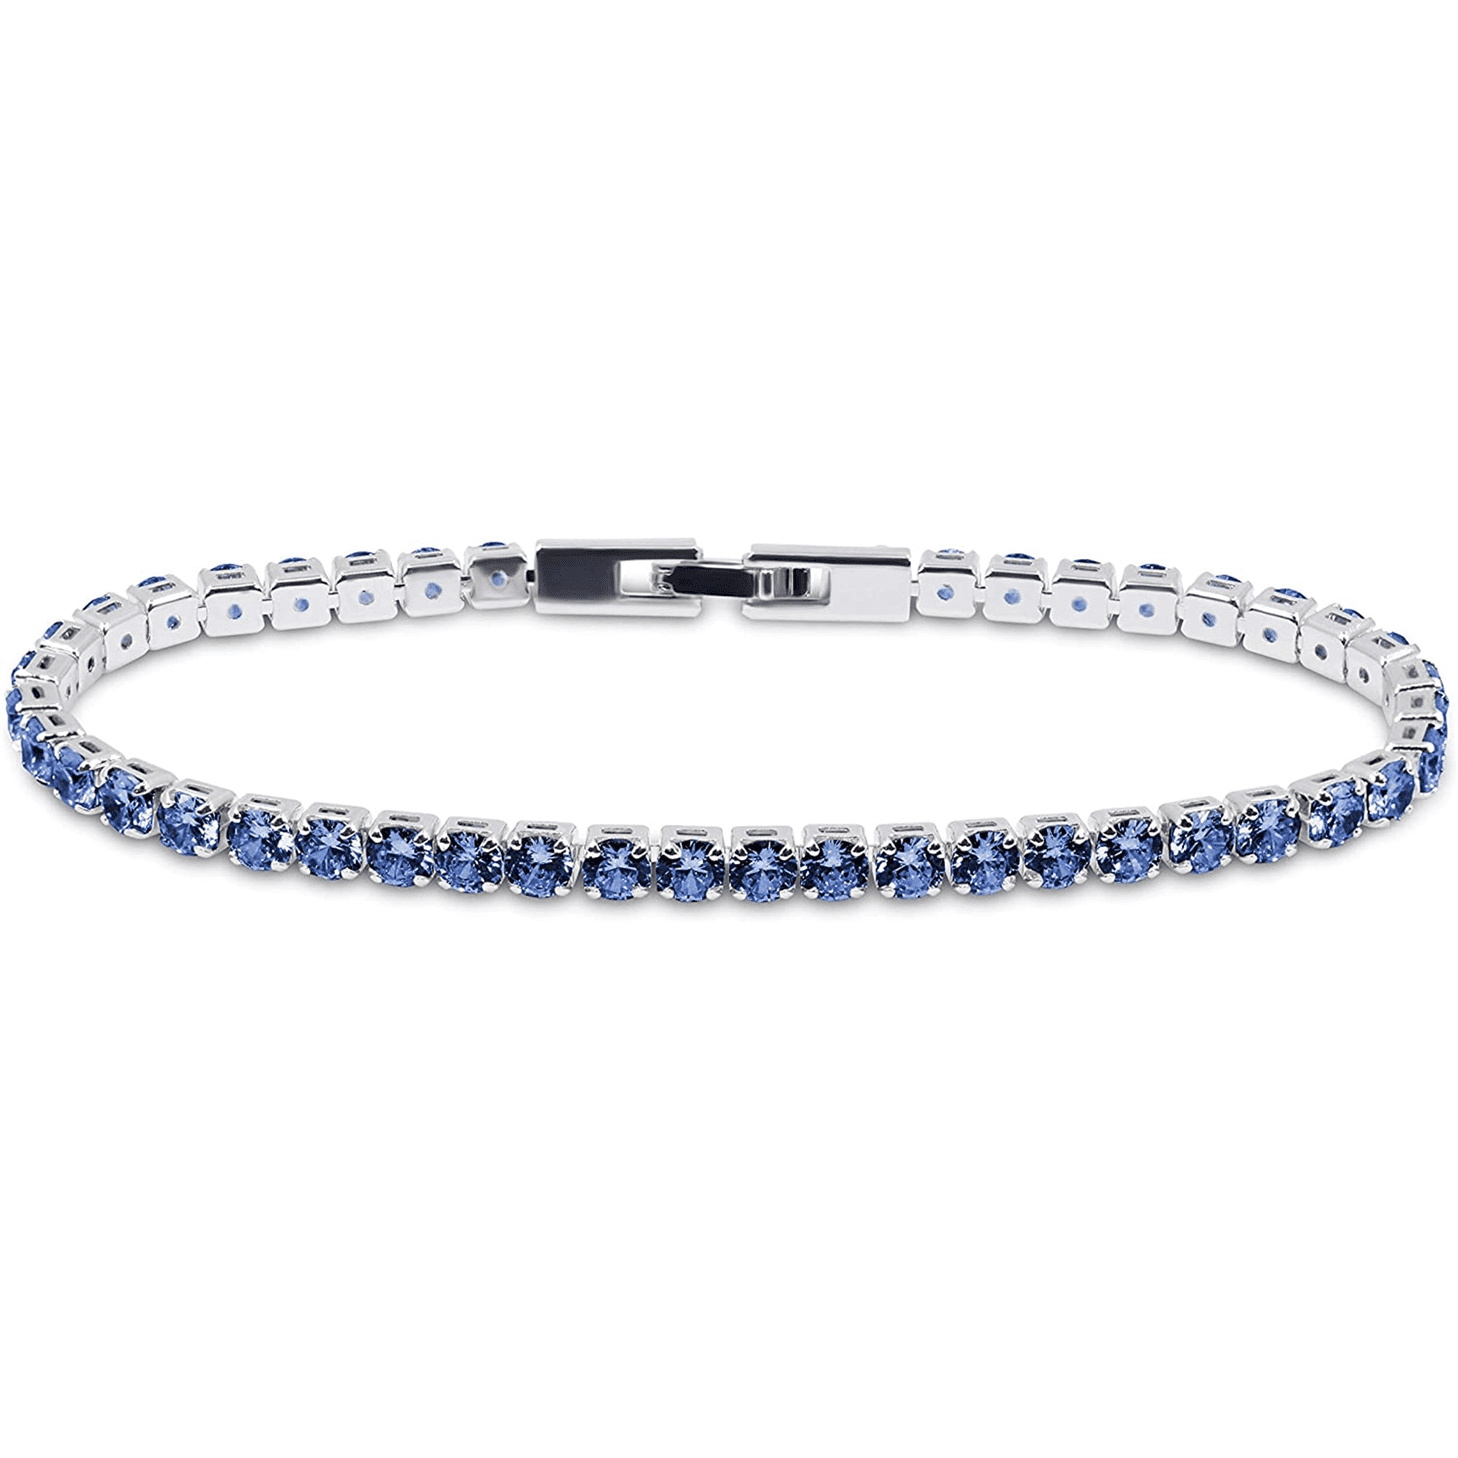 Vintage Southwestern Bracelet - Pow Wow Seed Beads - Navy Blue Gray Bangle  | eBay